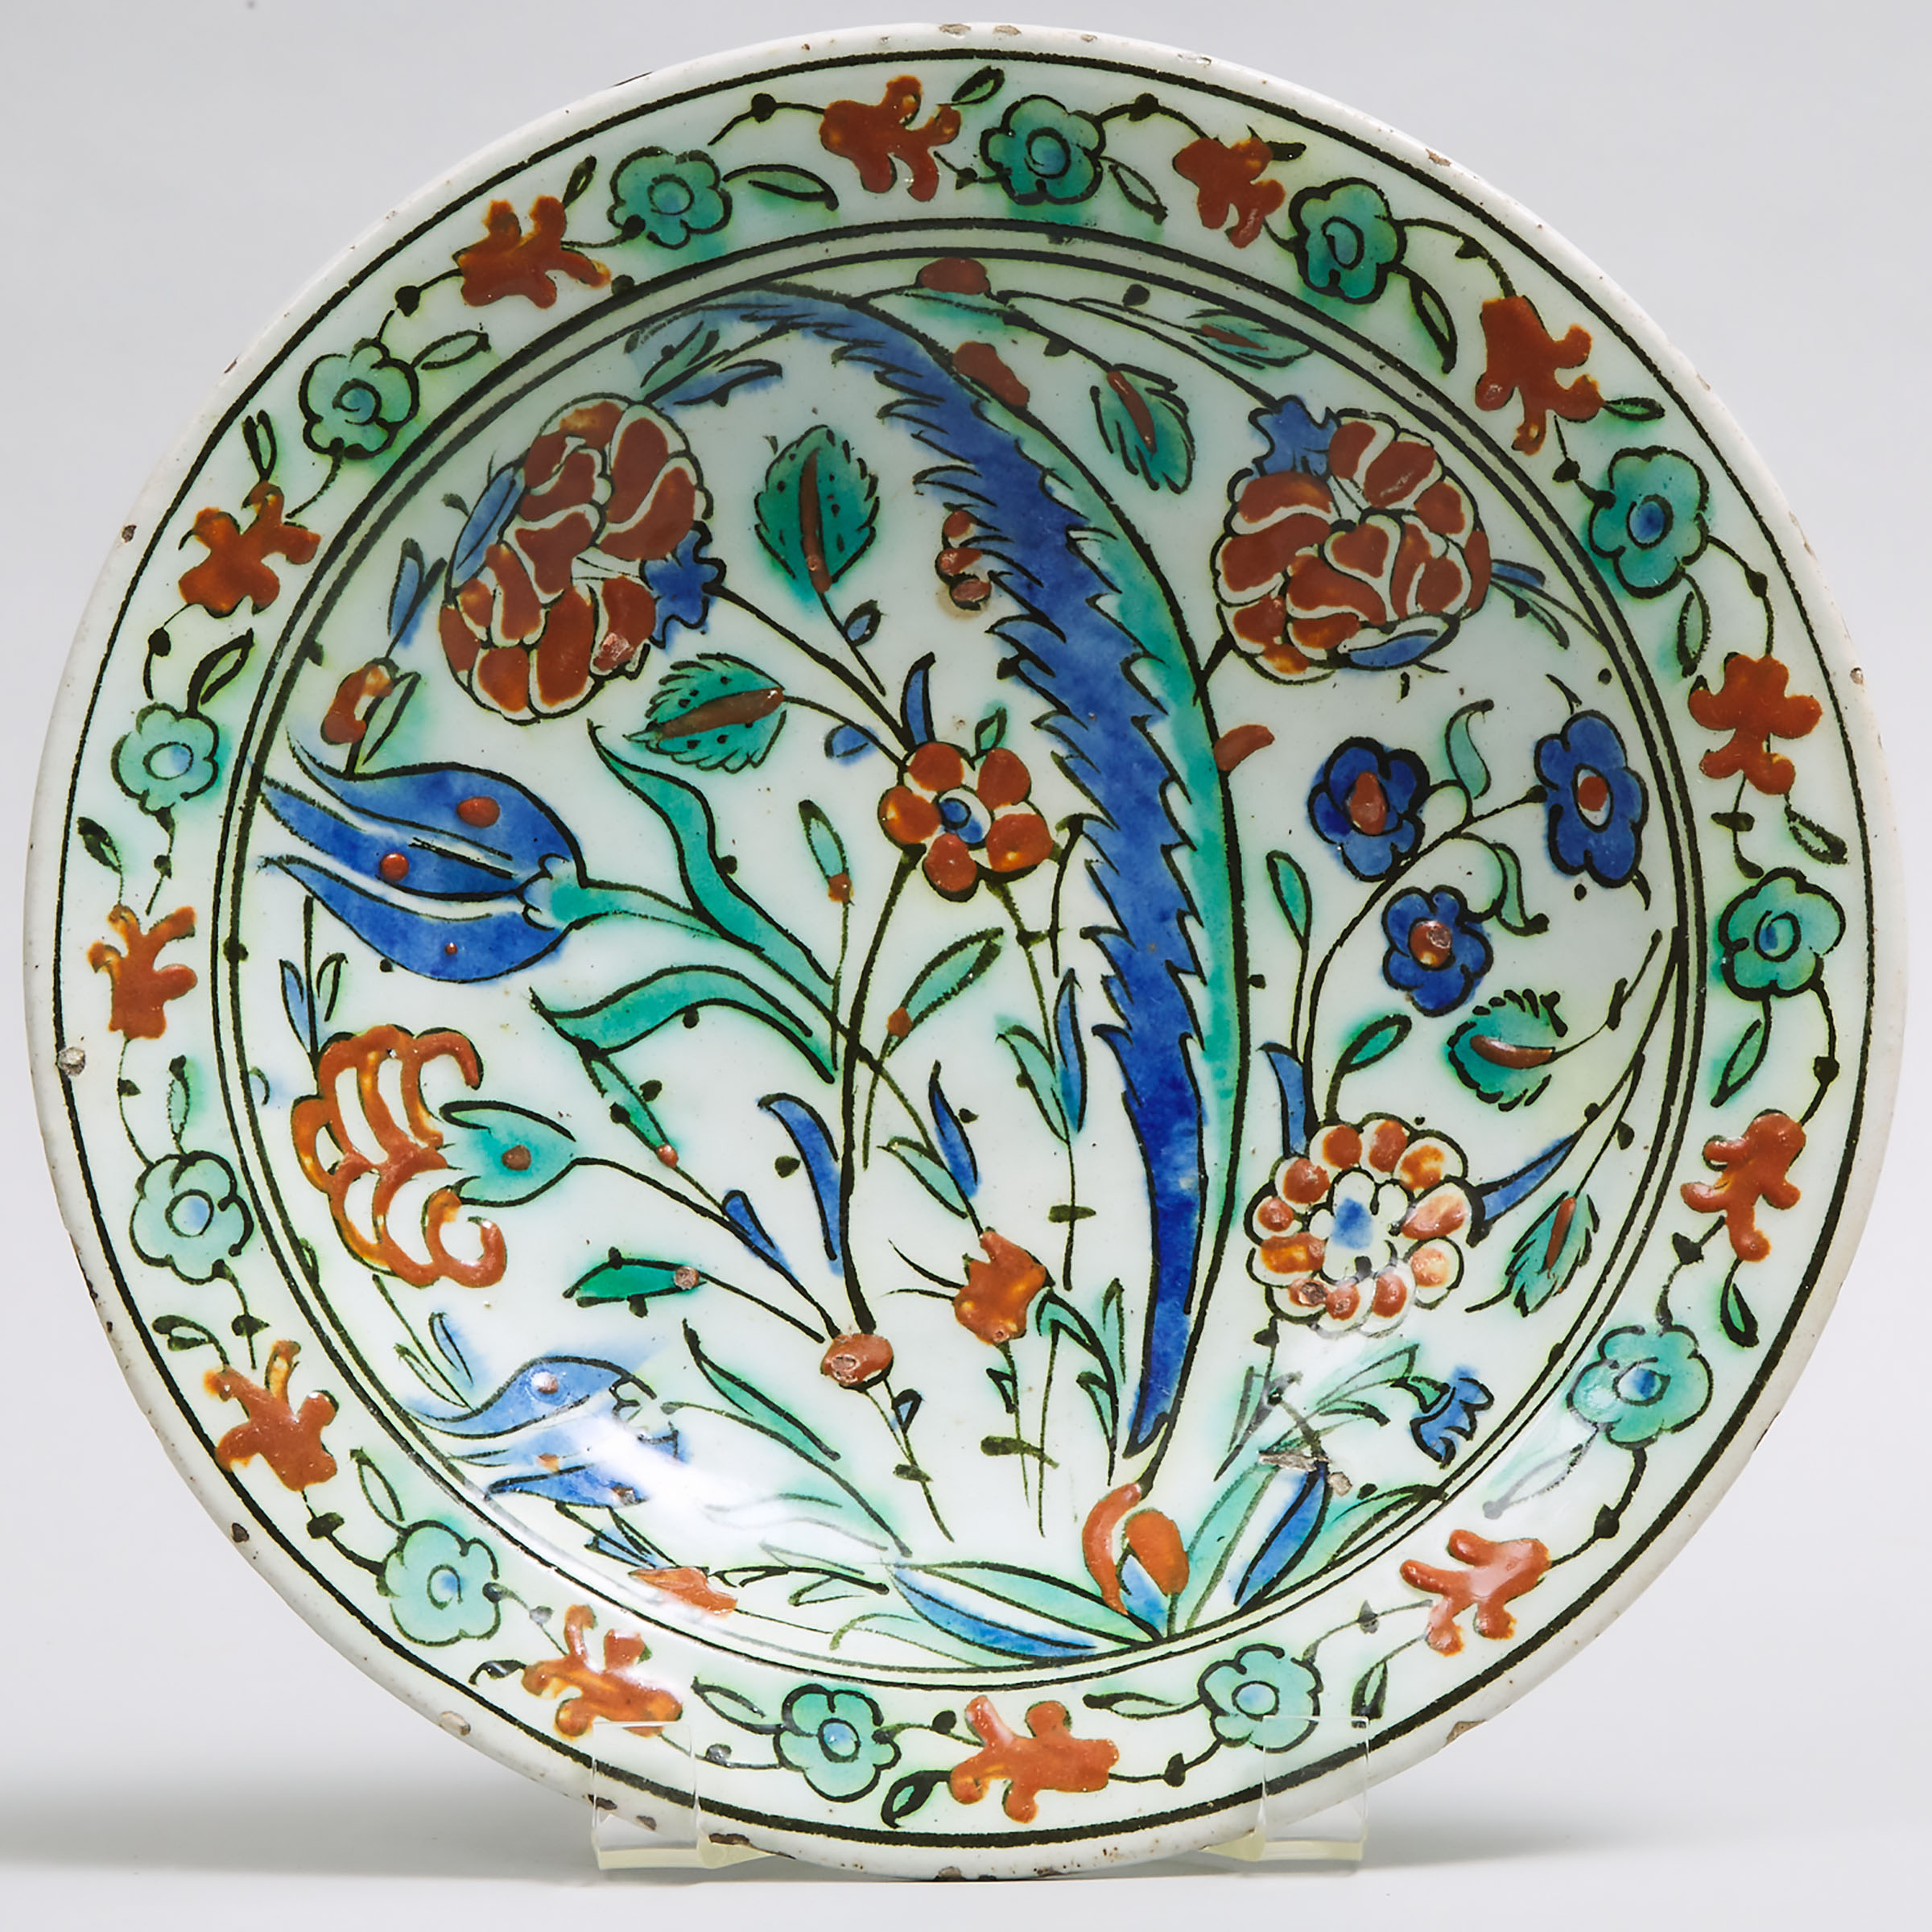 Iznik Pottery Dish, Ottoman Turkey, 2nd half, 16th century